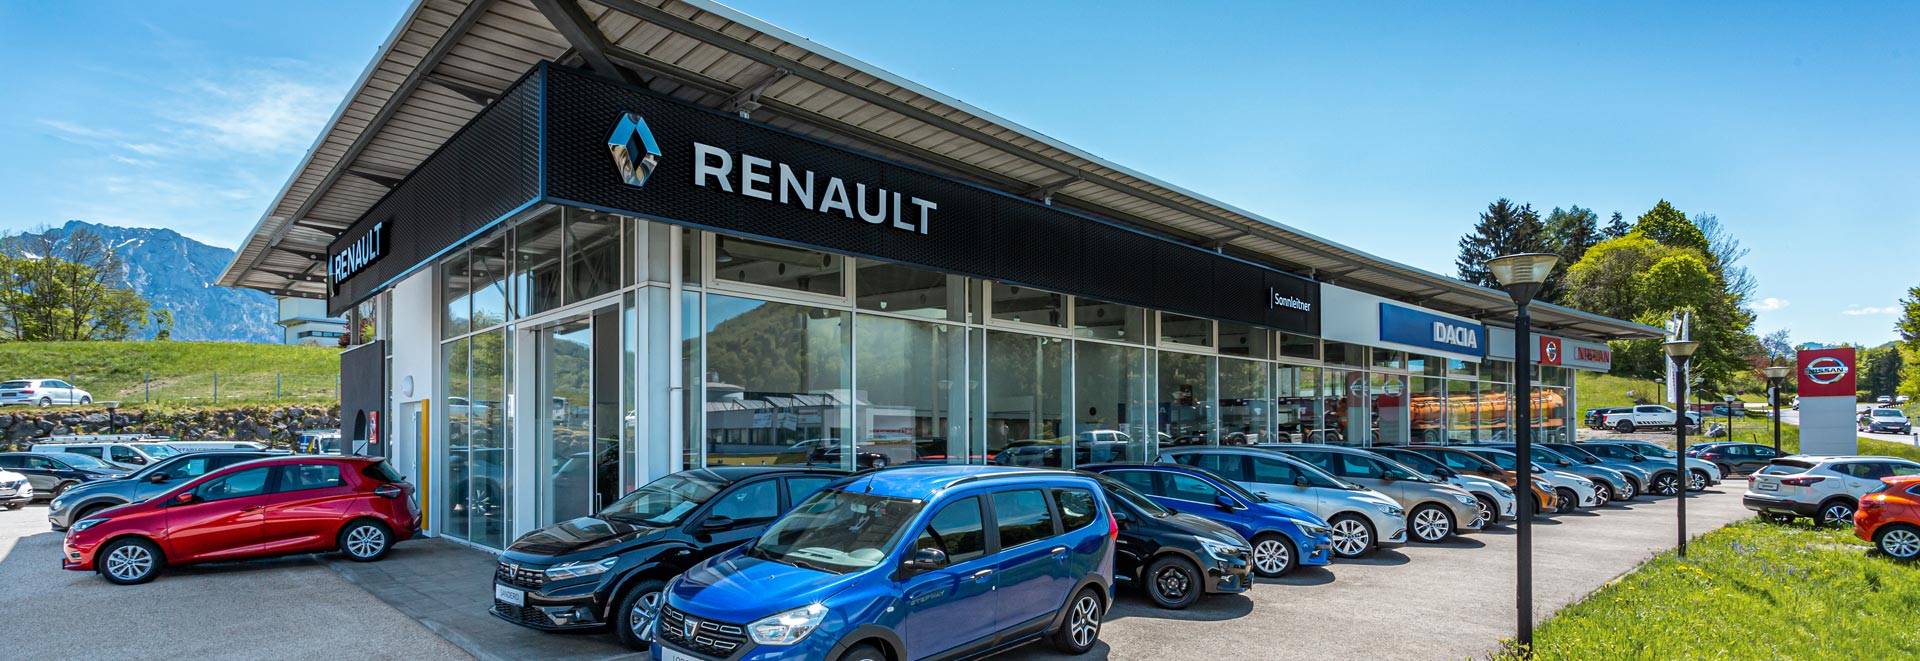 Renault Wien by Sonnleitner 100% Auto